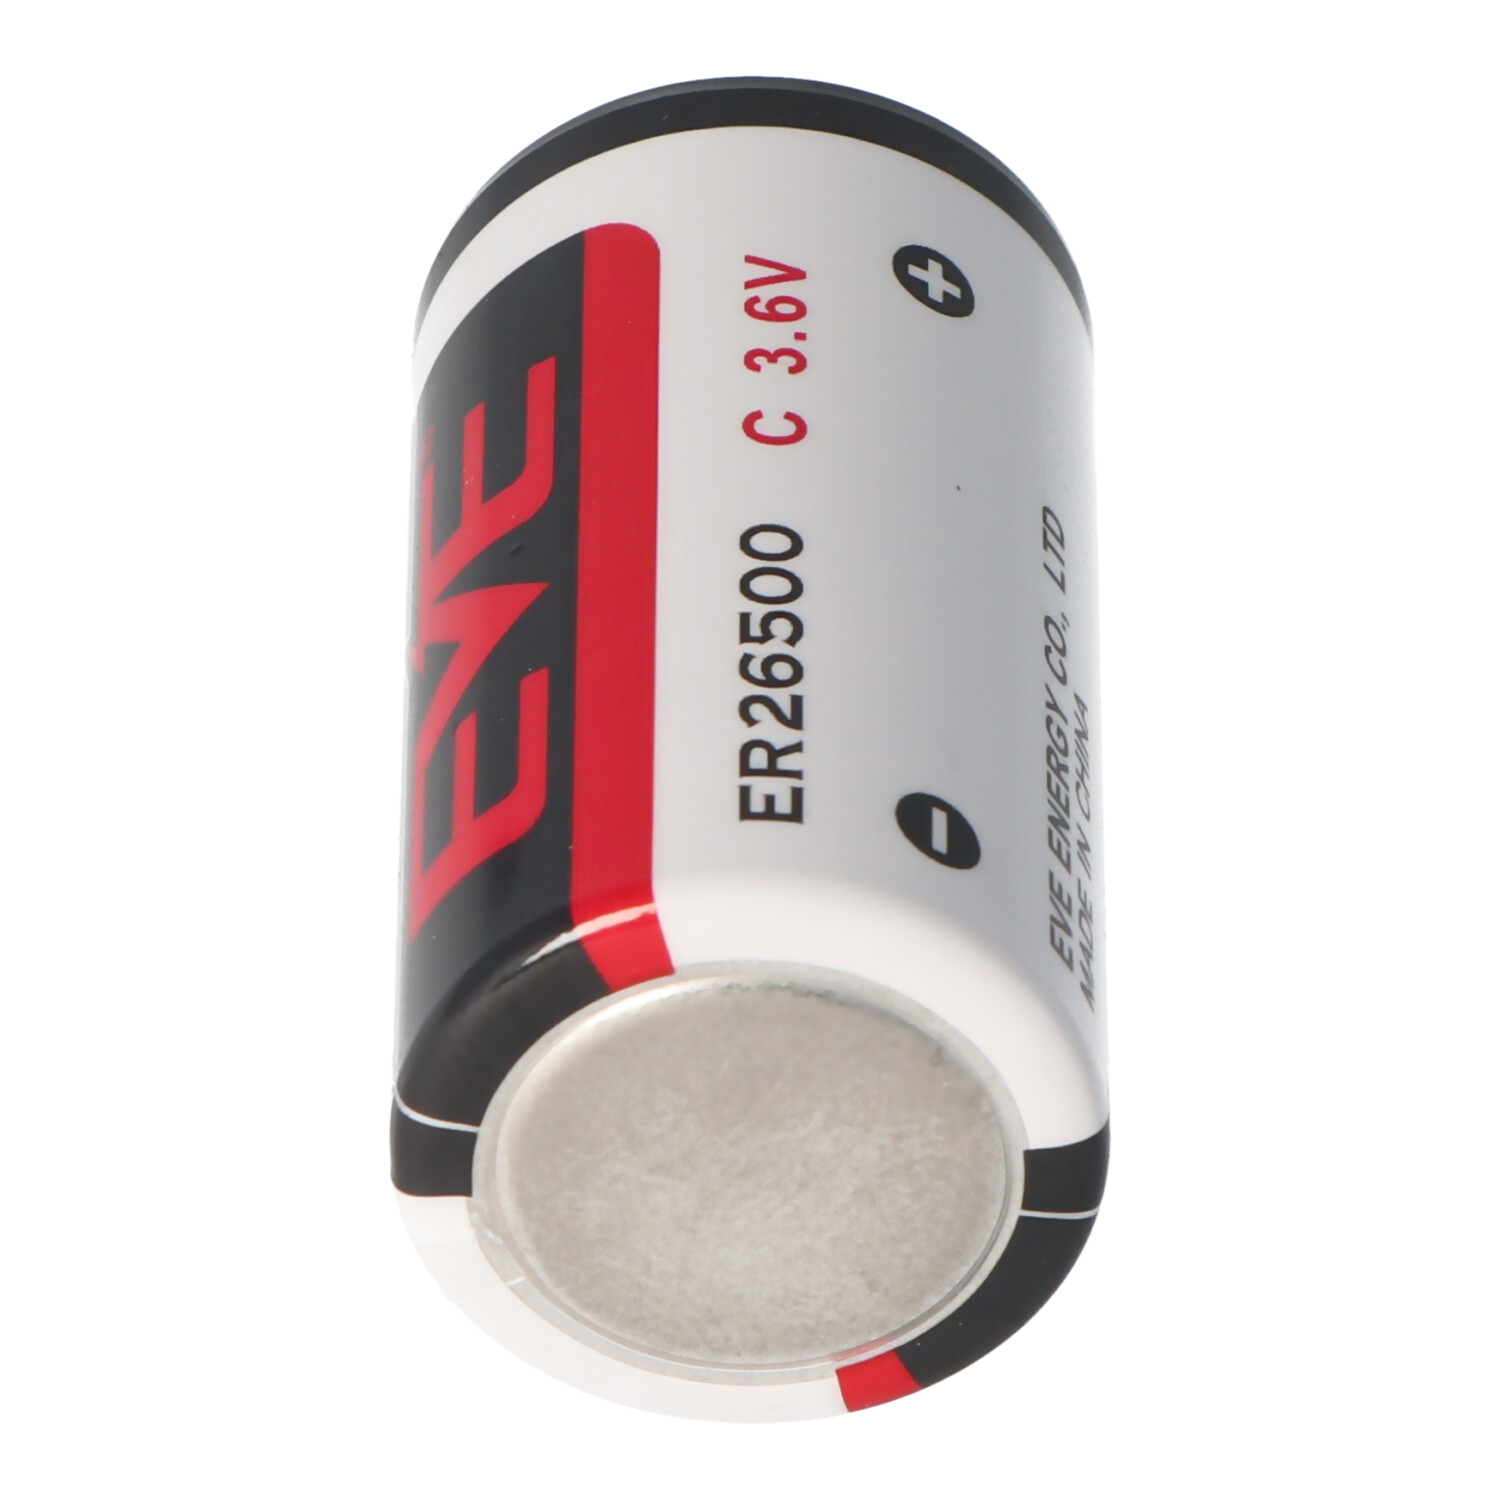 ER26500 Lithium Batterie C Size Bobbin ER 26500, 3,6 Volt 8500mAh mit schmalem Pluspol min. 0,3mm, max. 0,5mm